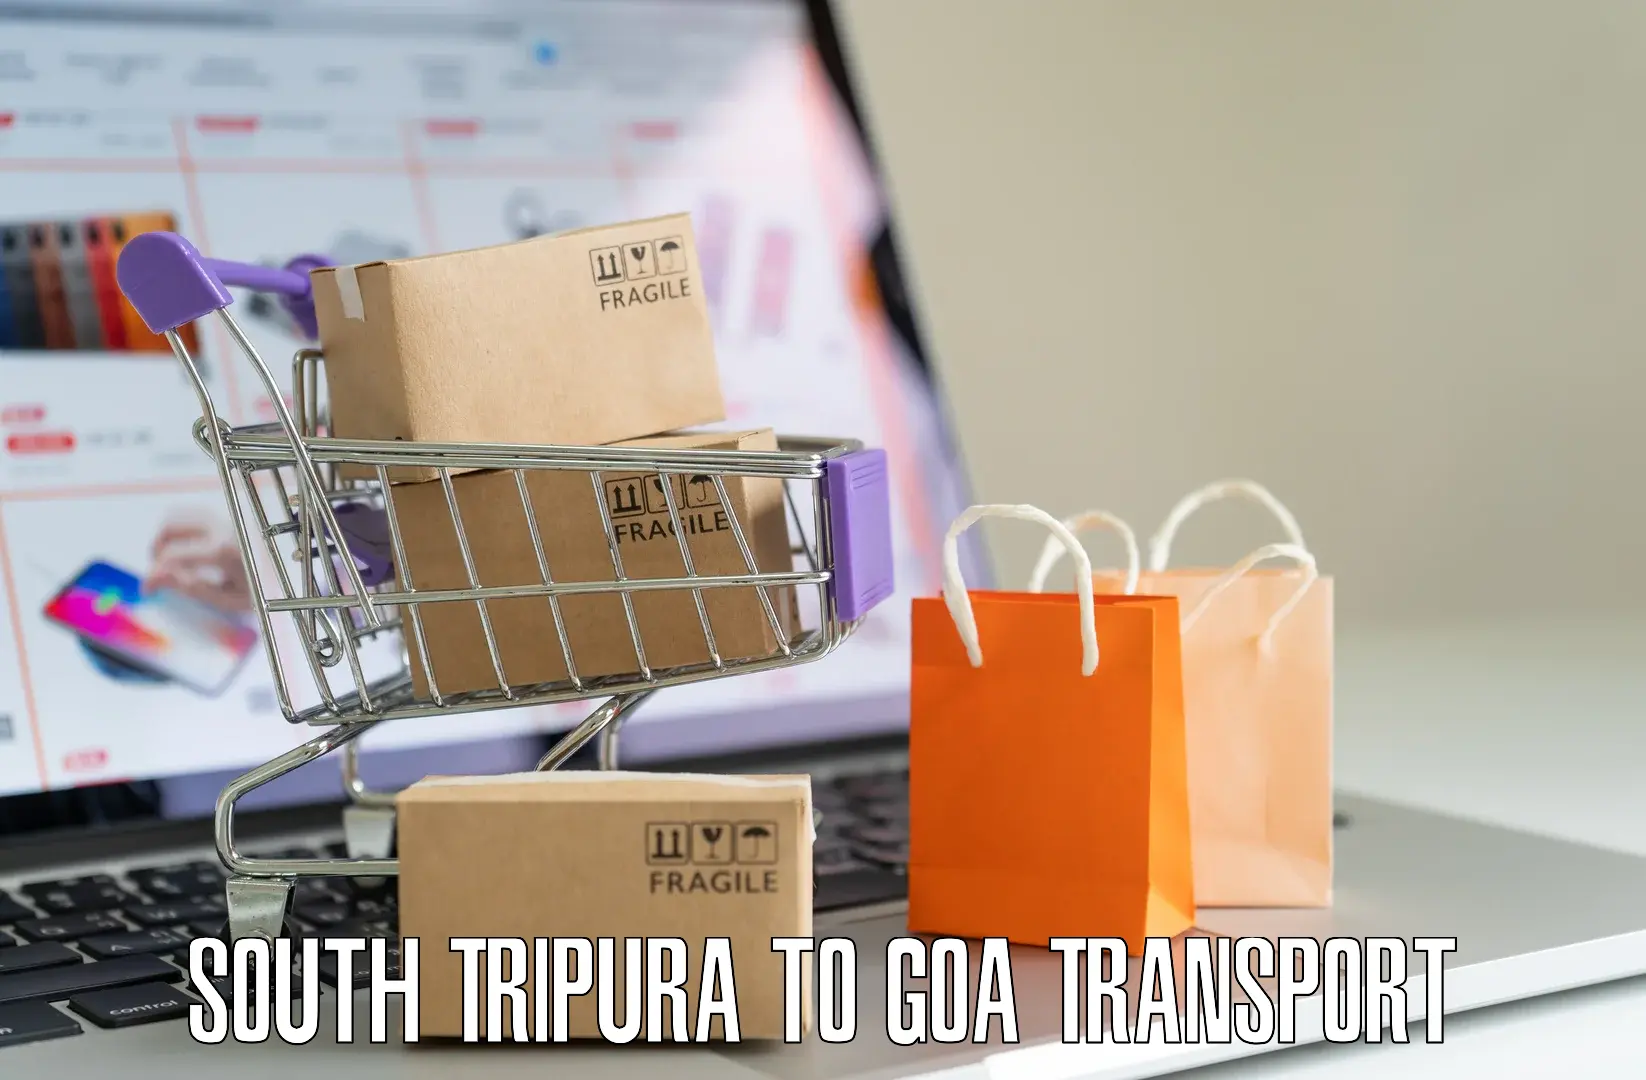 Sending bike to another city South Tripura to Goa